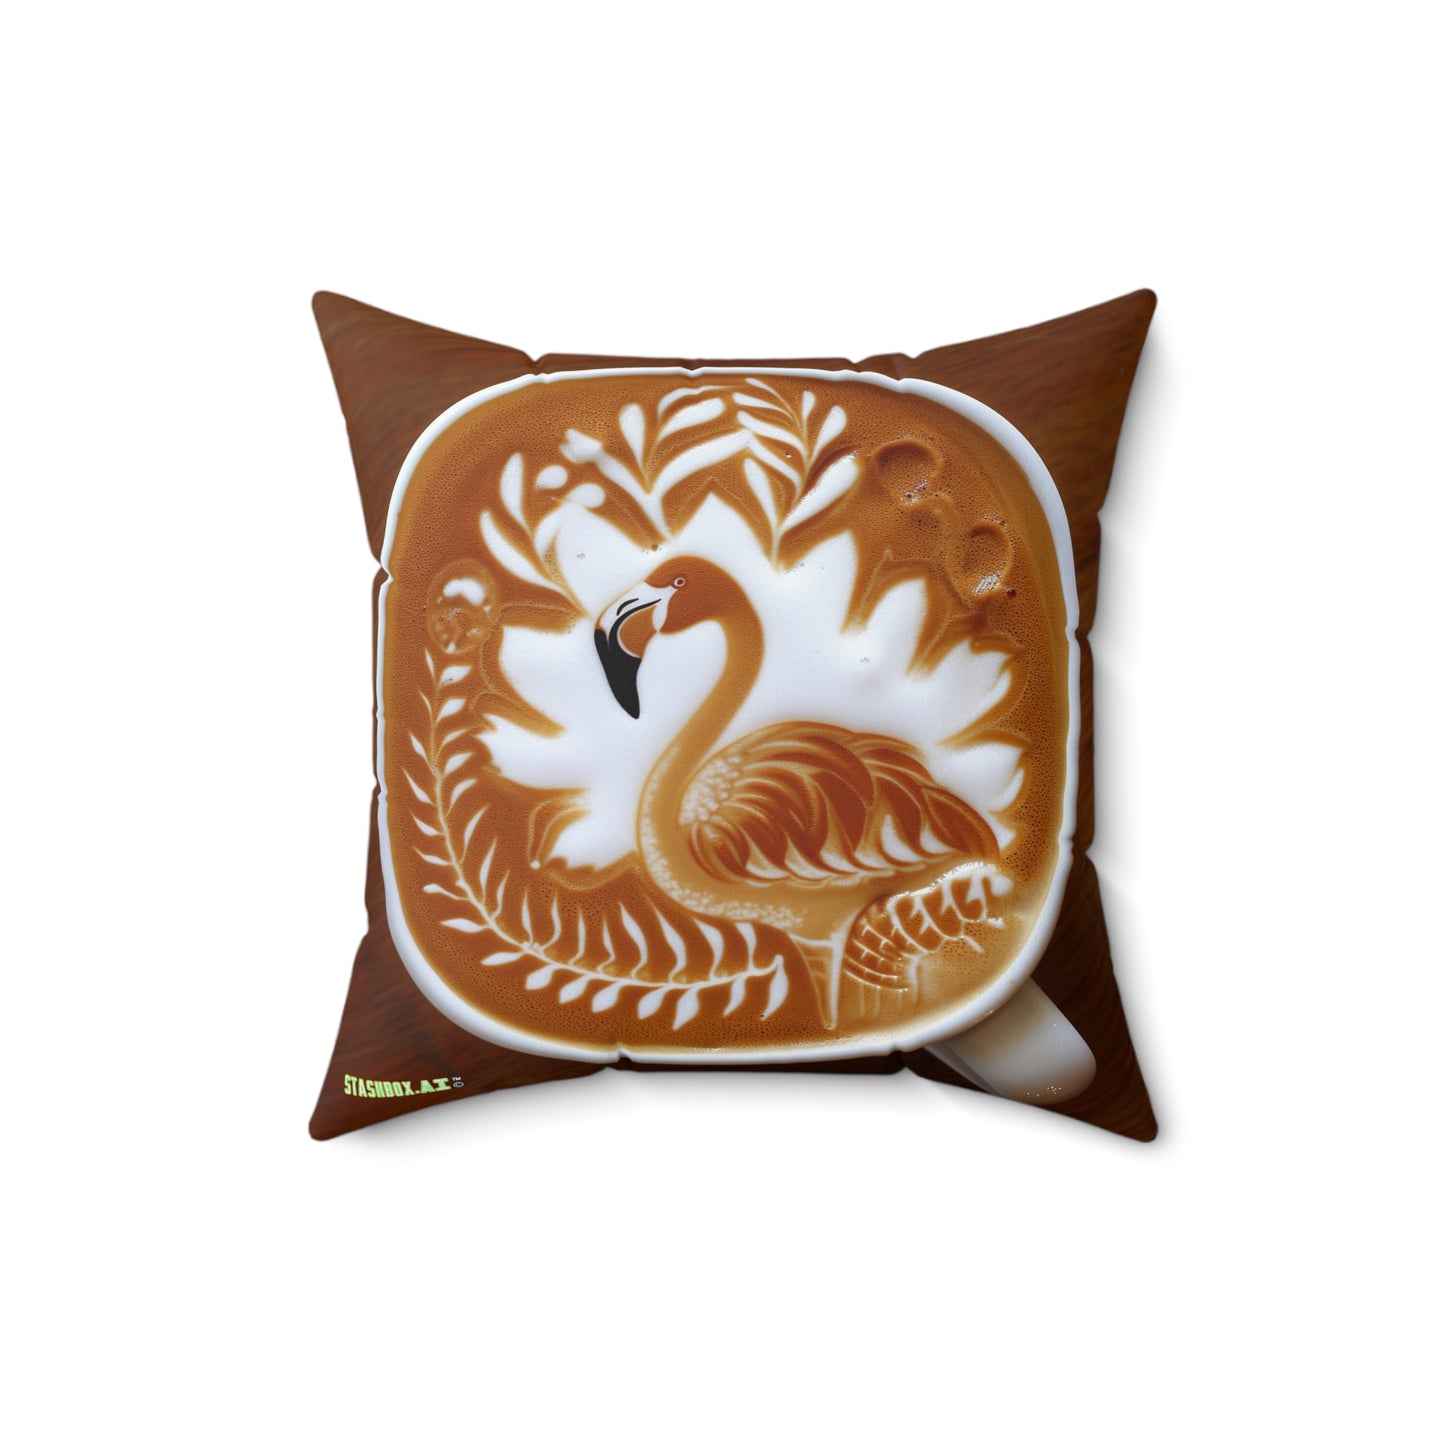 Faux Suede Square Pillow Flamingo Latte art and Tropical Scene 001 002